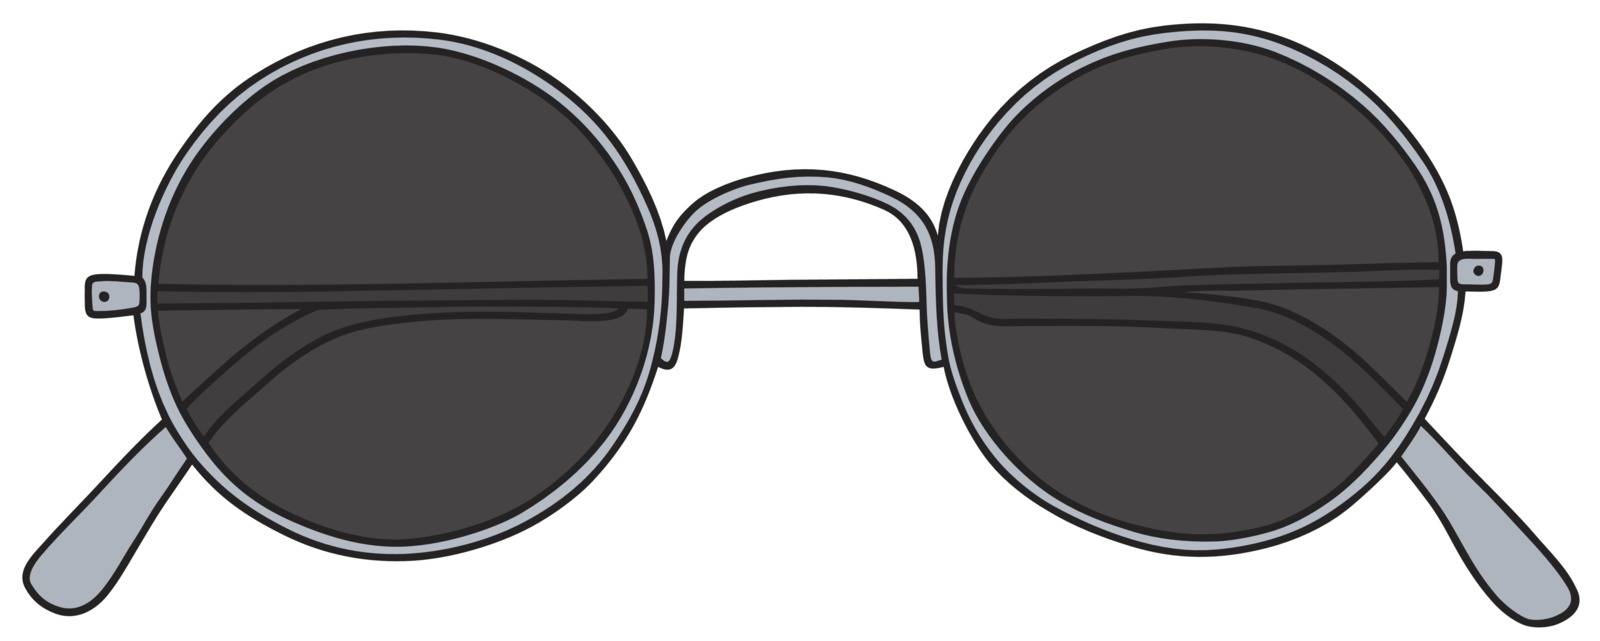 Classic black glasses by vostal